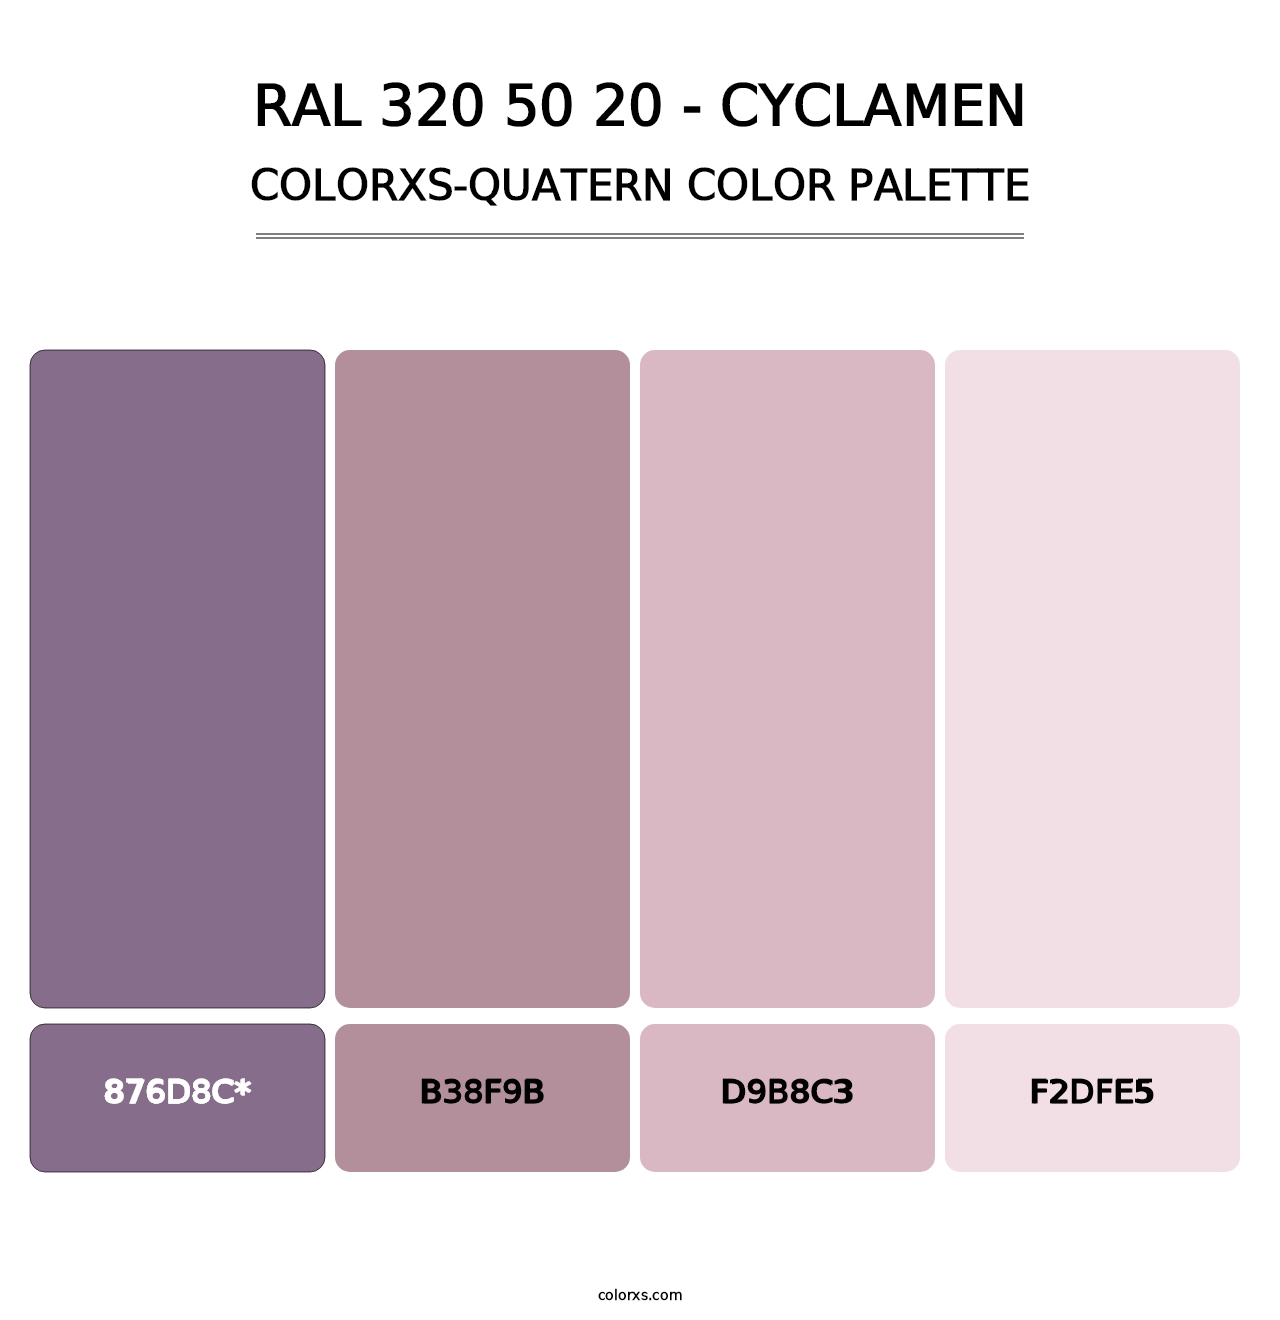 RAL 320 50 20 - Cyclamen - Colorxs Quatern Palette